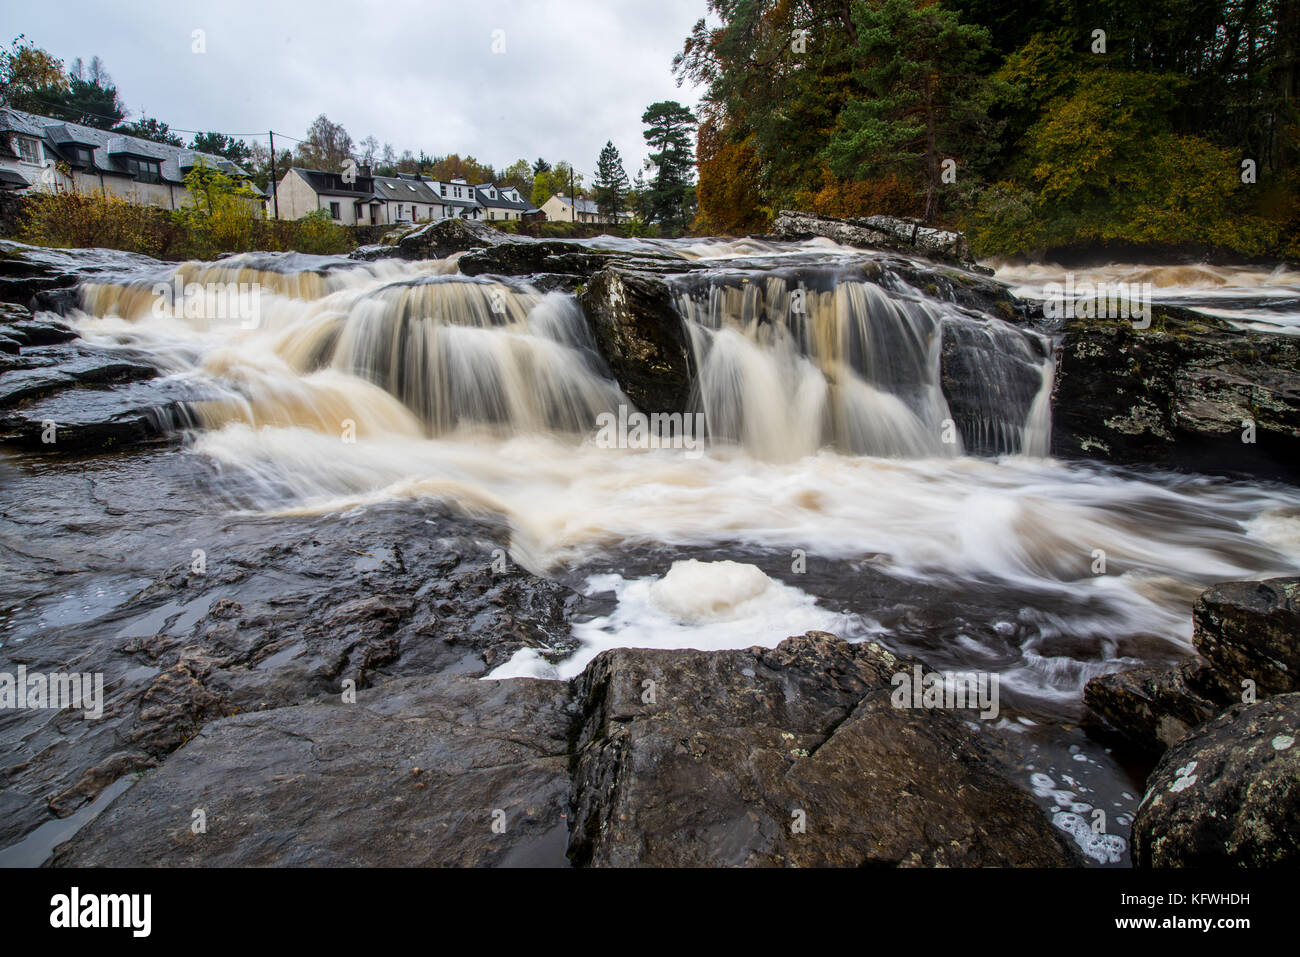 Falls of Dochart in Killin Scotland blurry water cascades Stock Photo